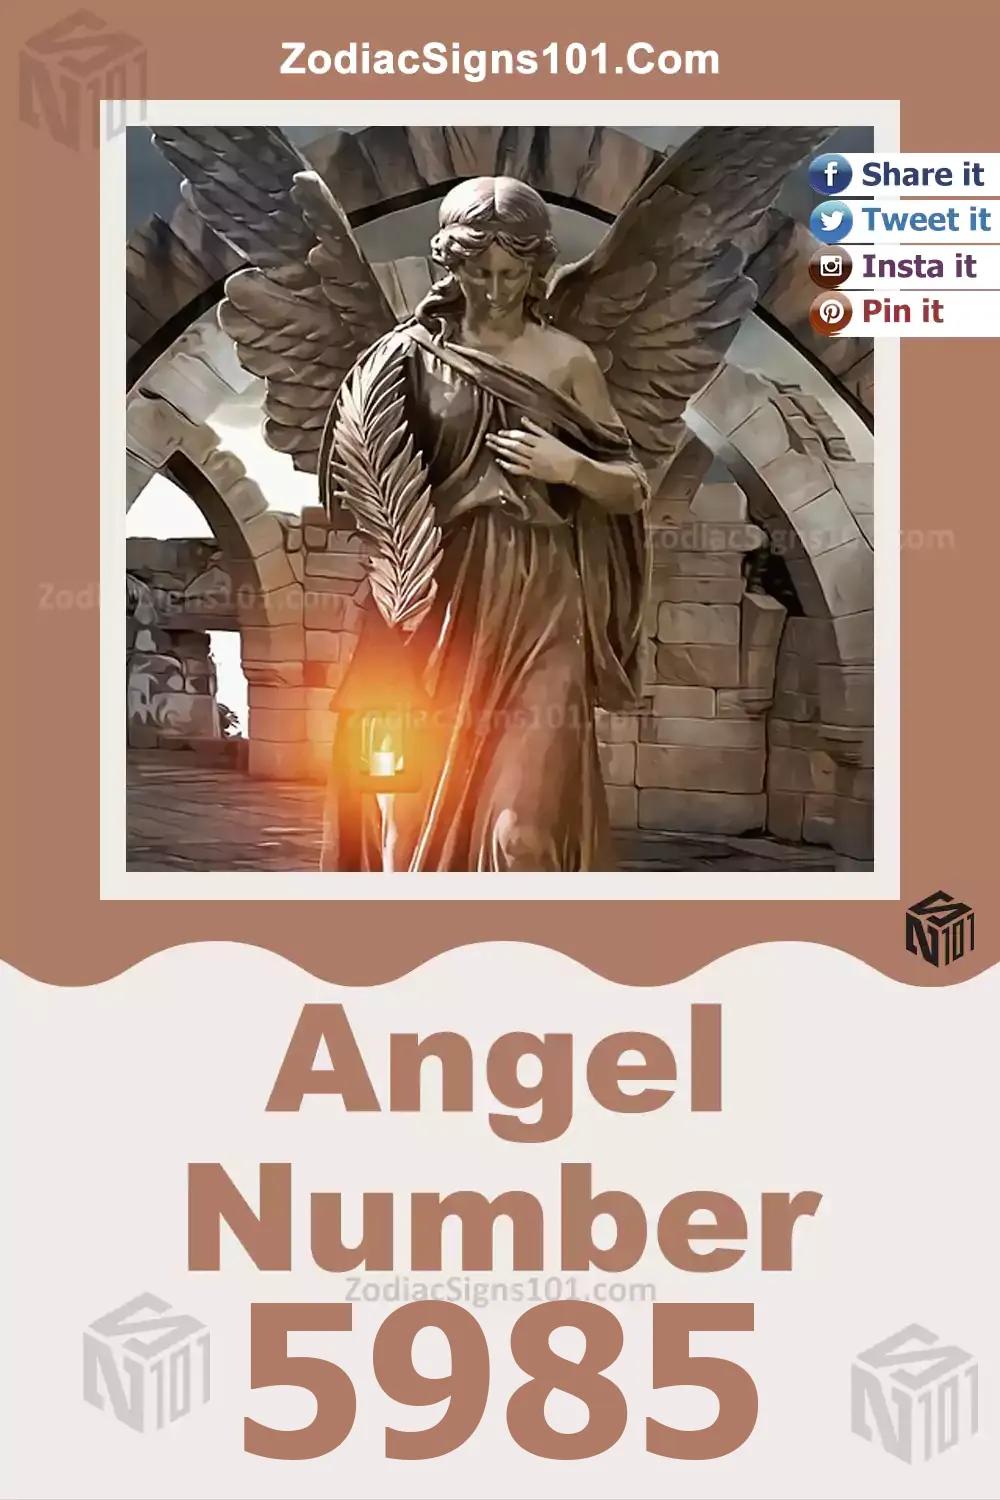 5985-Angel-Number-Meaning.jpg